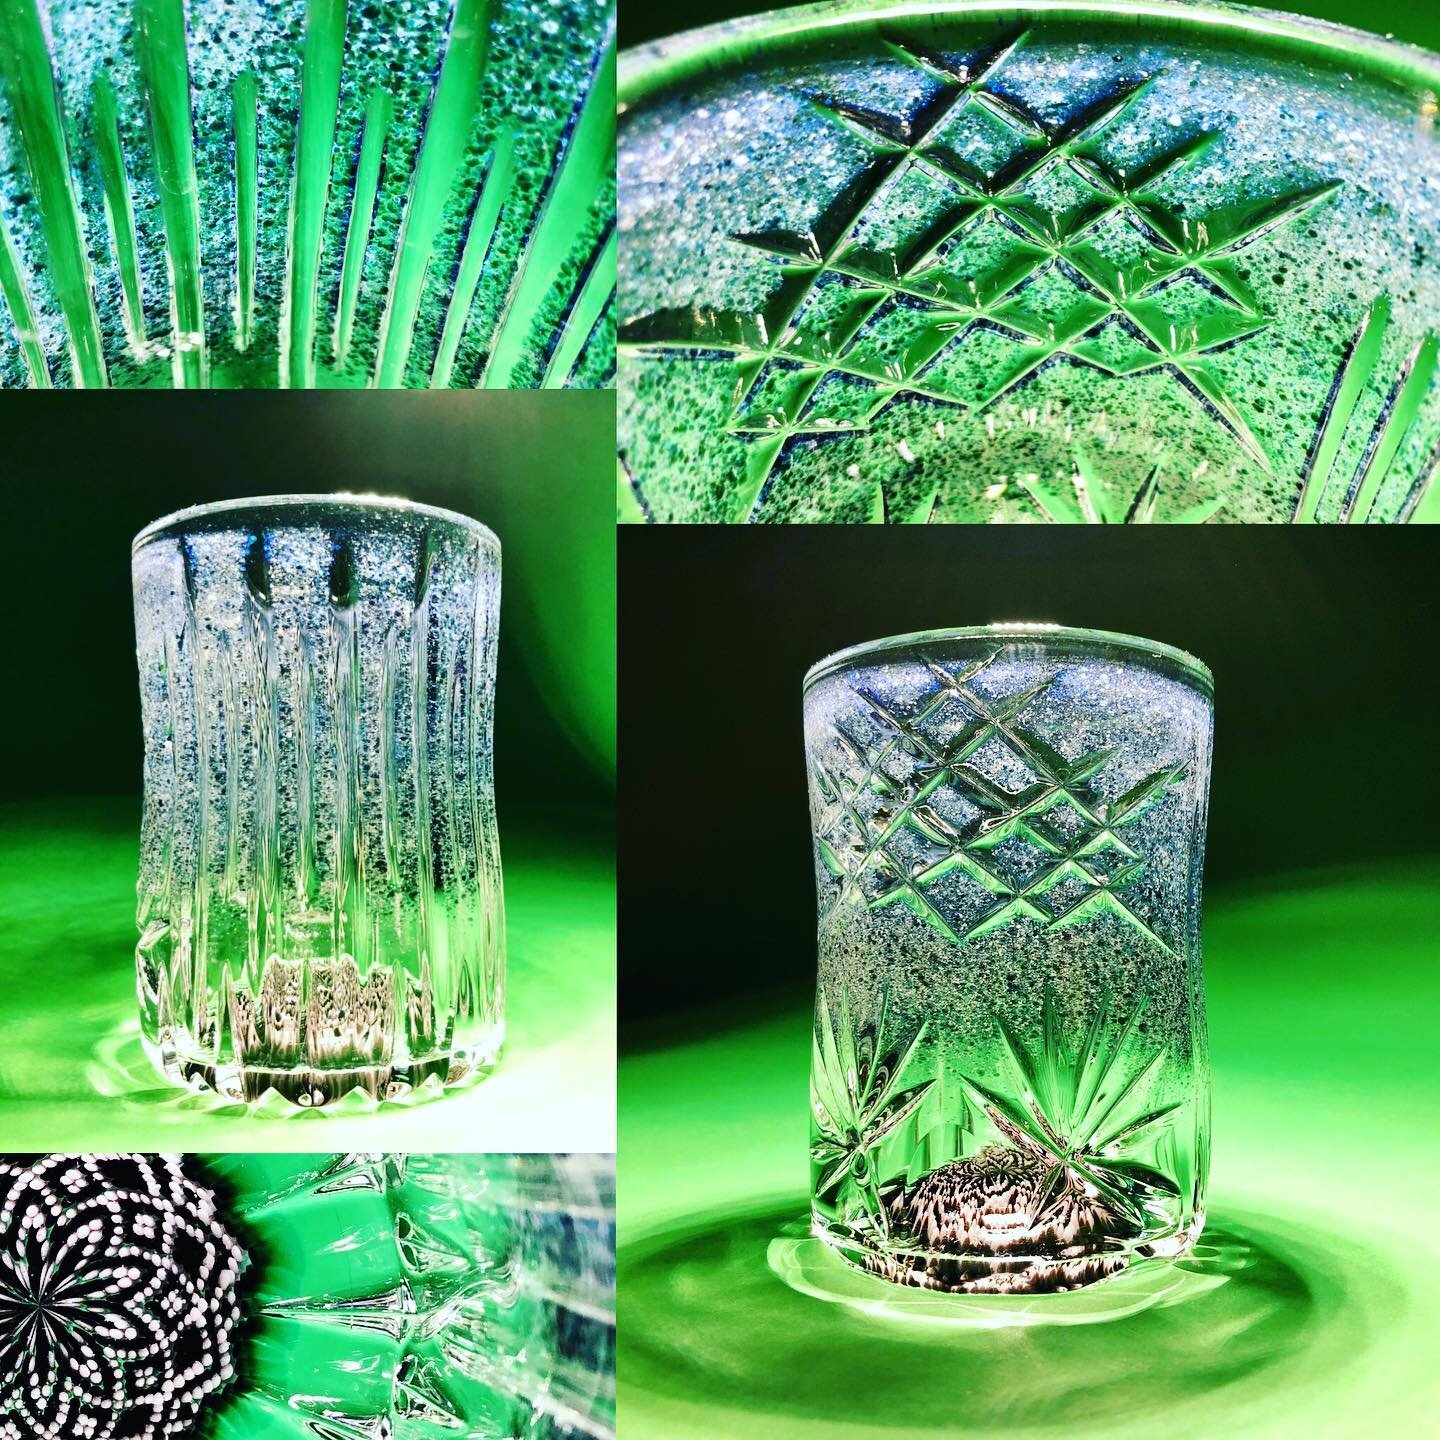 -
cold cutta glass with no remorse...

10 oz

#glassworks  #functionalglassart #handmade #drinkingvessels #glassporn #carvedglass  #handmade  #cutglass #dotticello #keepitglassy #cheers #art #properglassware #borosilicate #barart #barglass #barcraft 